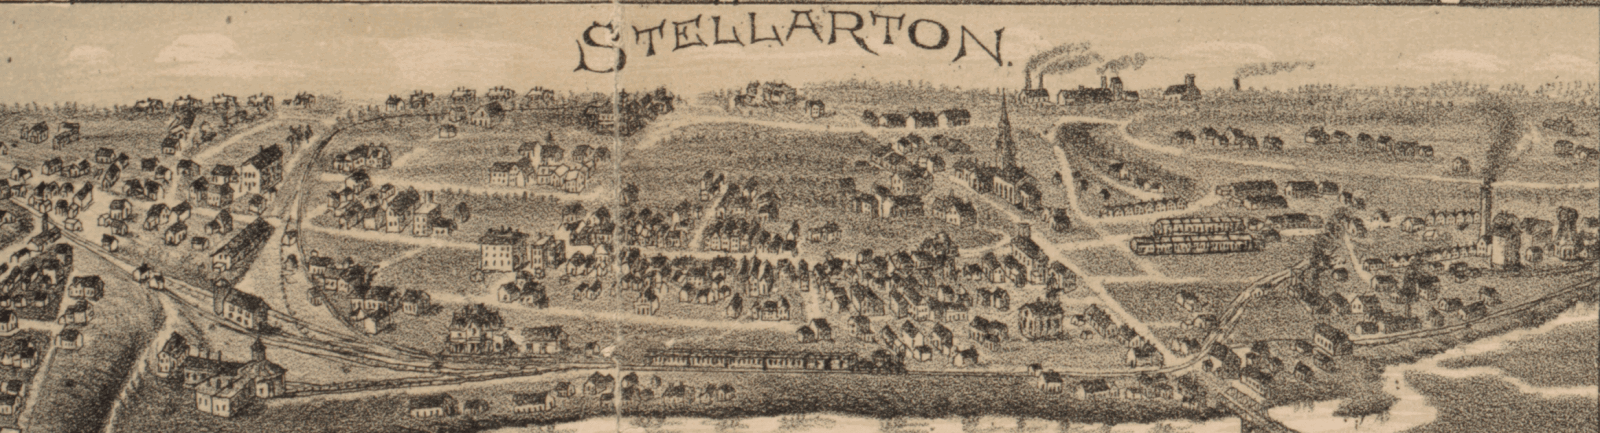 1889 Stellarton Map Birds eye view map